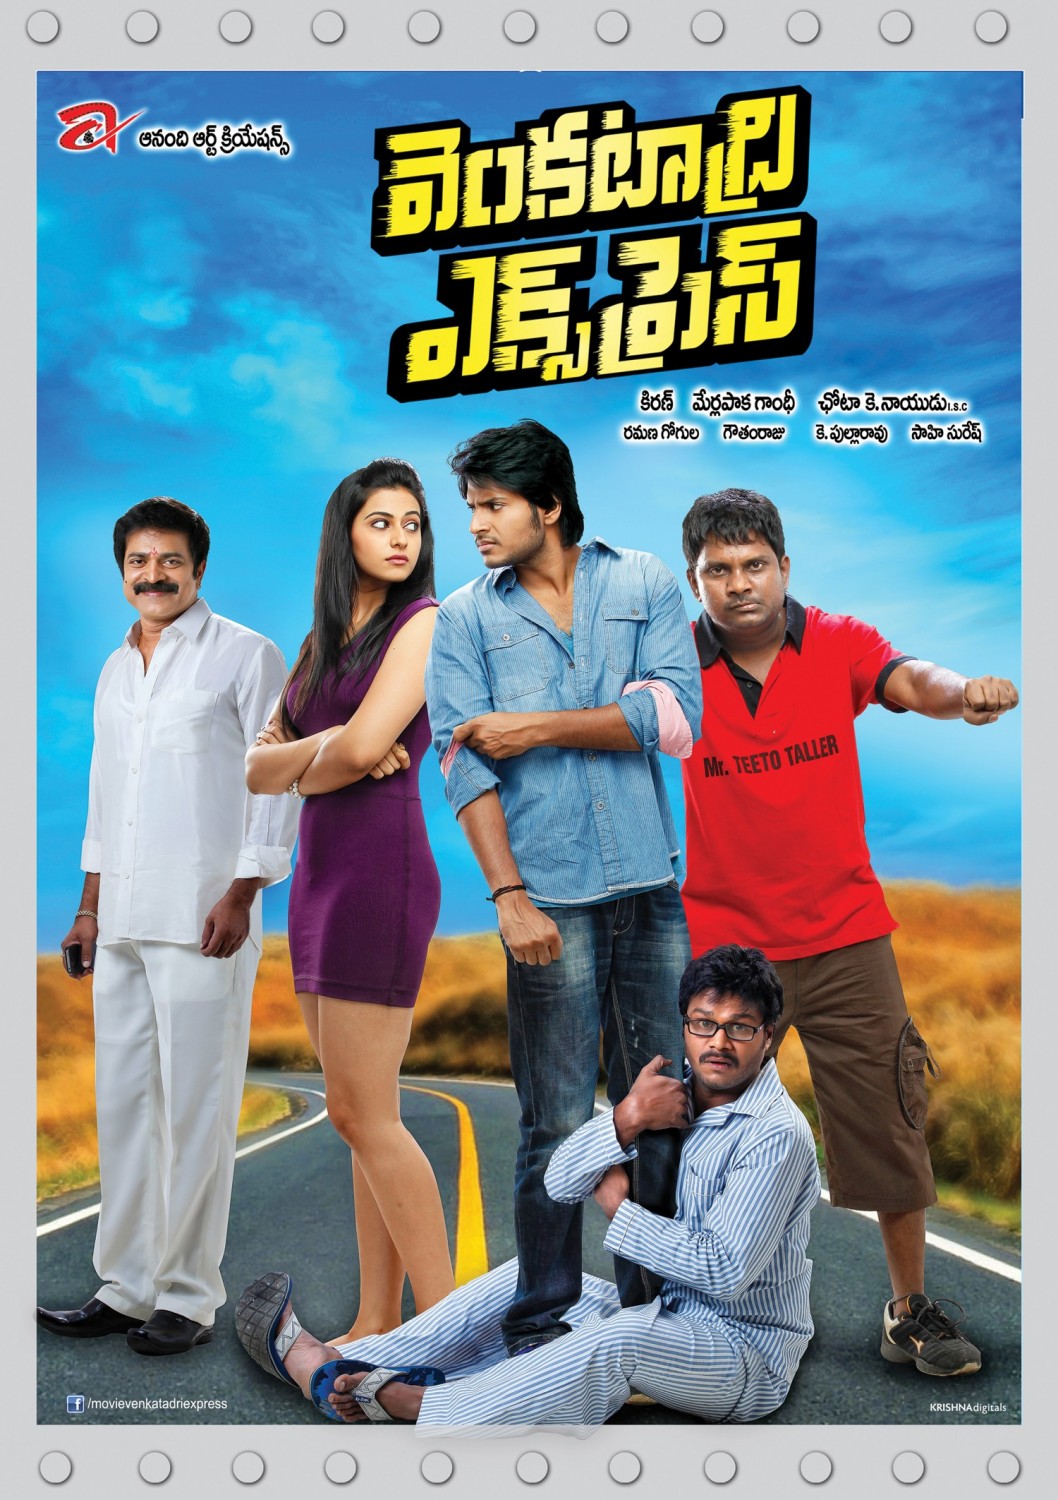 Extra Large Movie Poster Image for Venkatadri Express (#4 of 17)